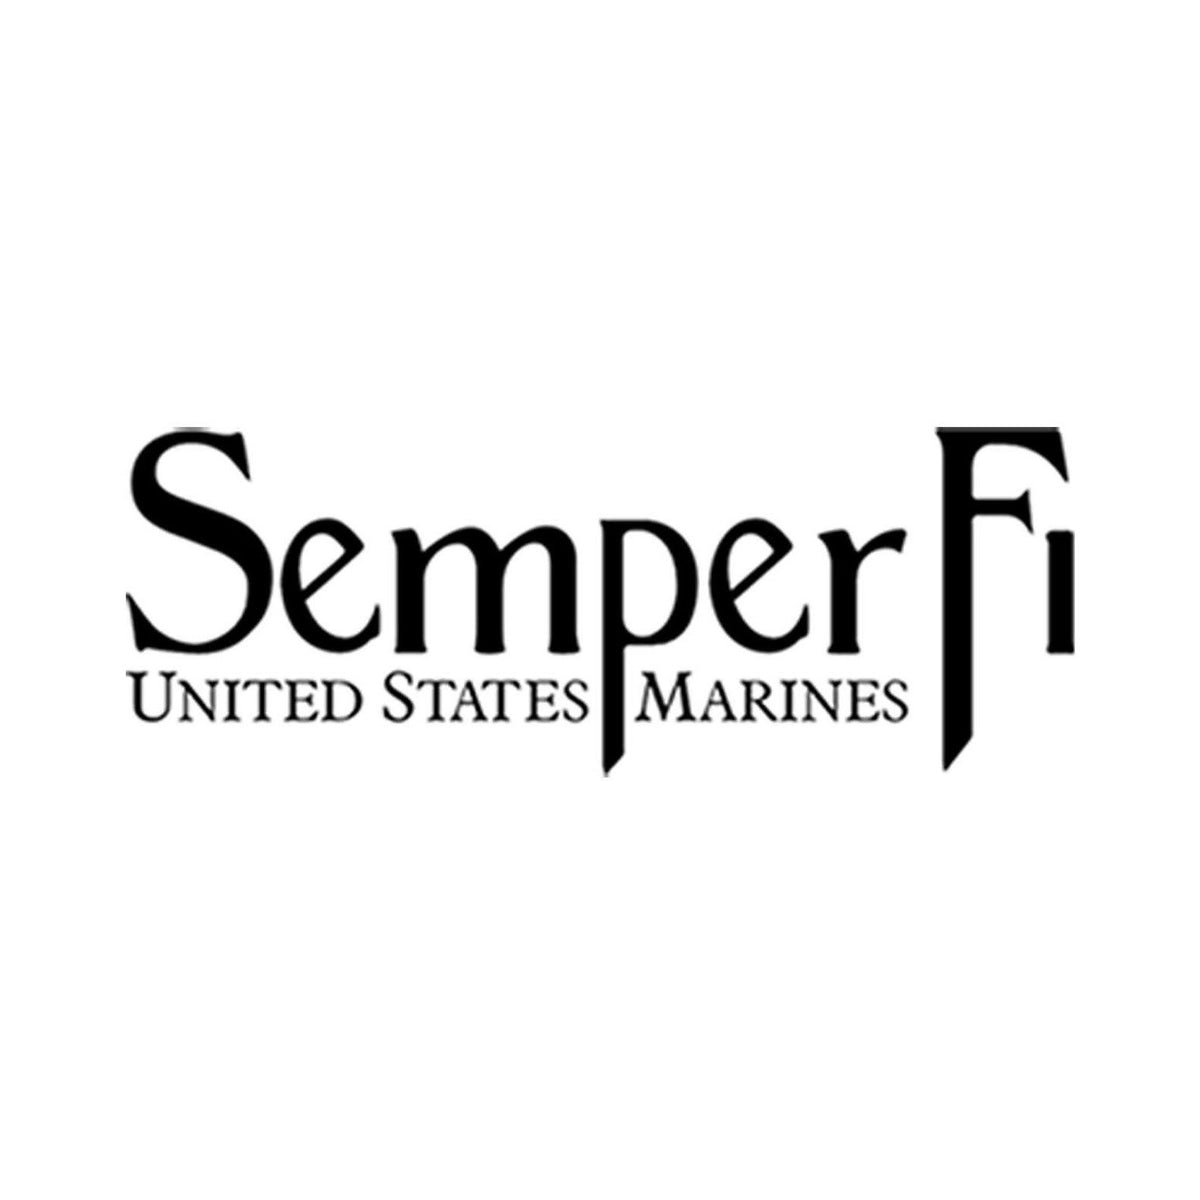 USMC Dri-Fit Performance Semper Fi Royal Blue T-Shirt